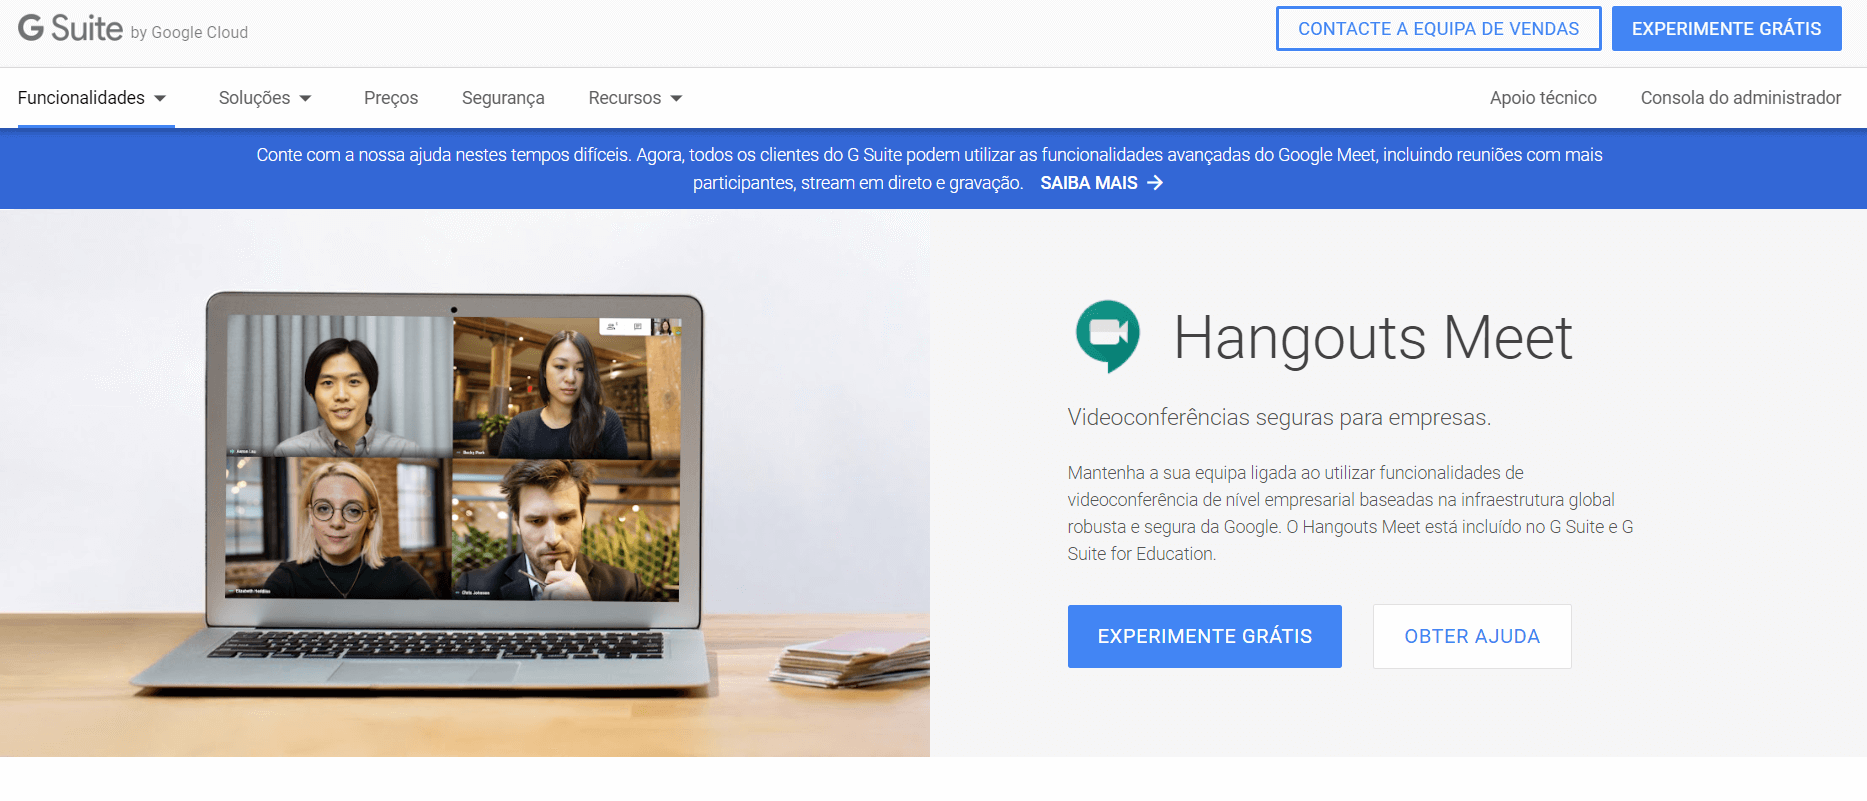 google-hangouts